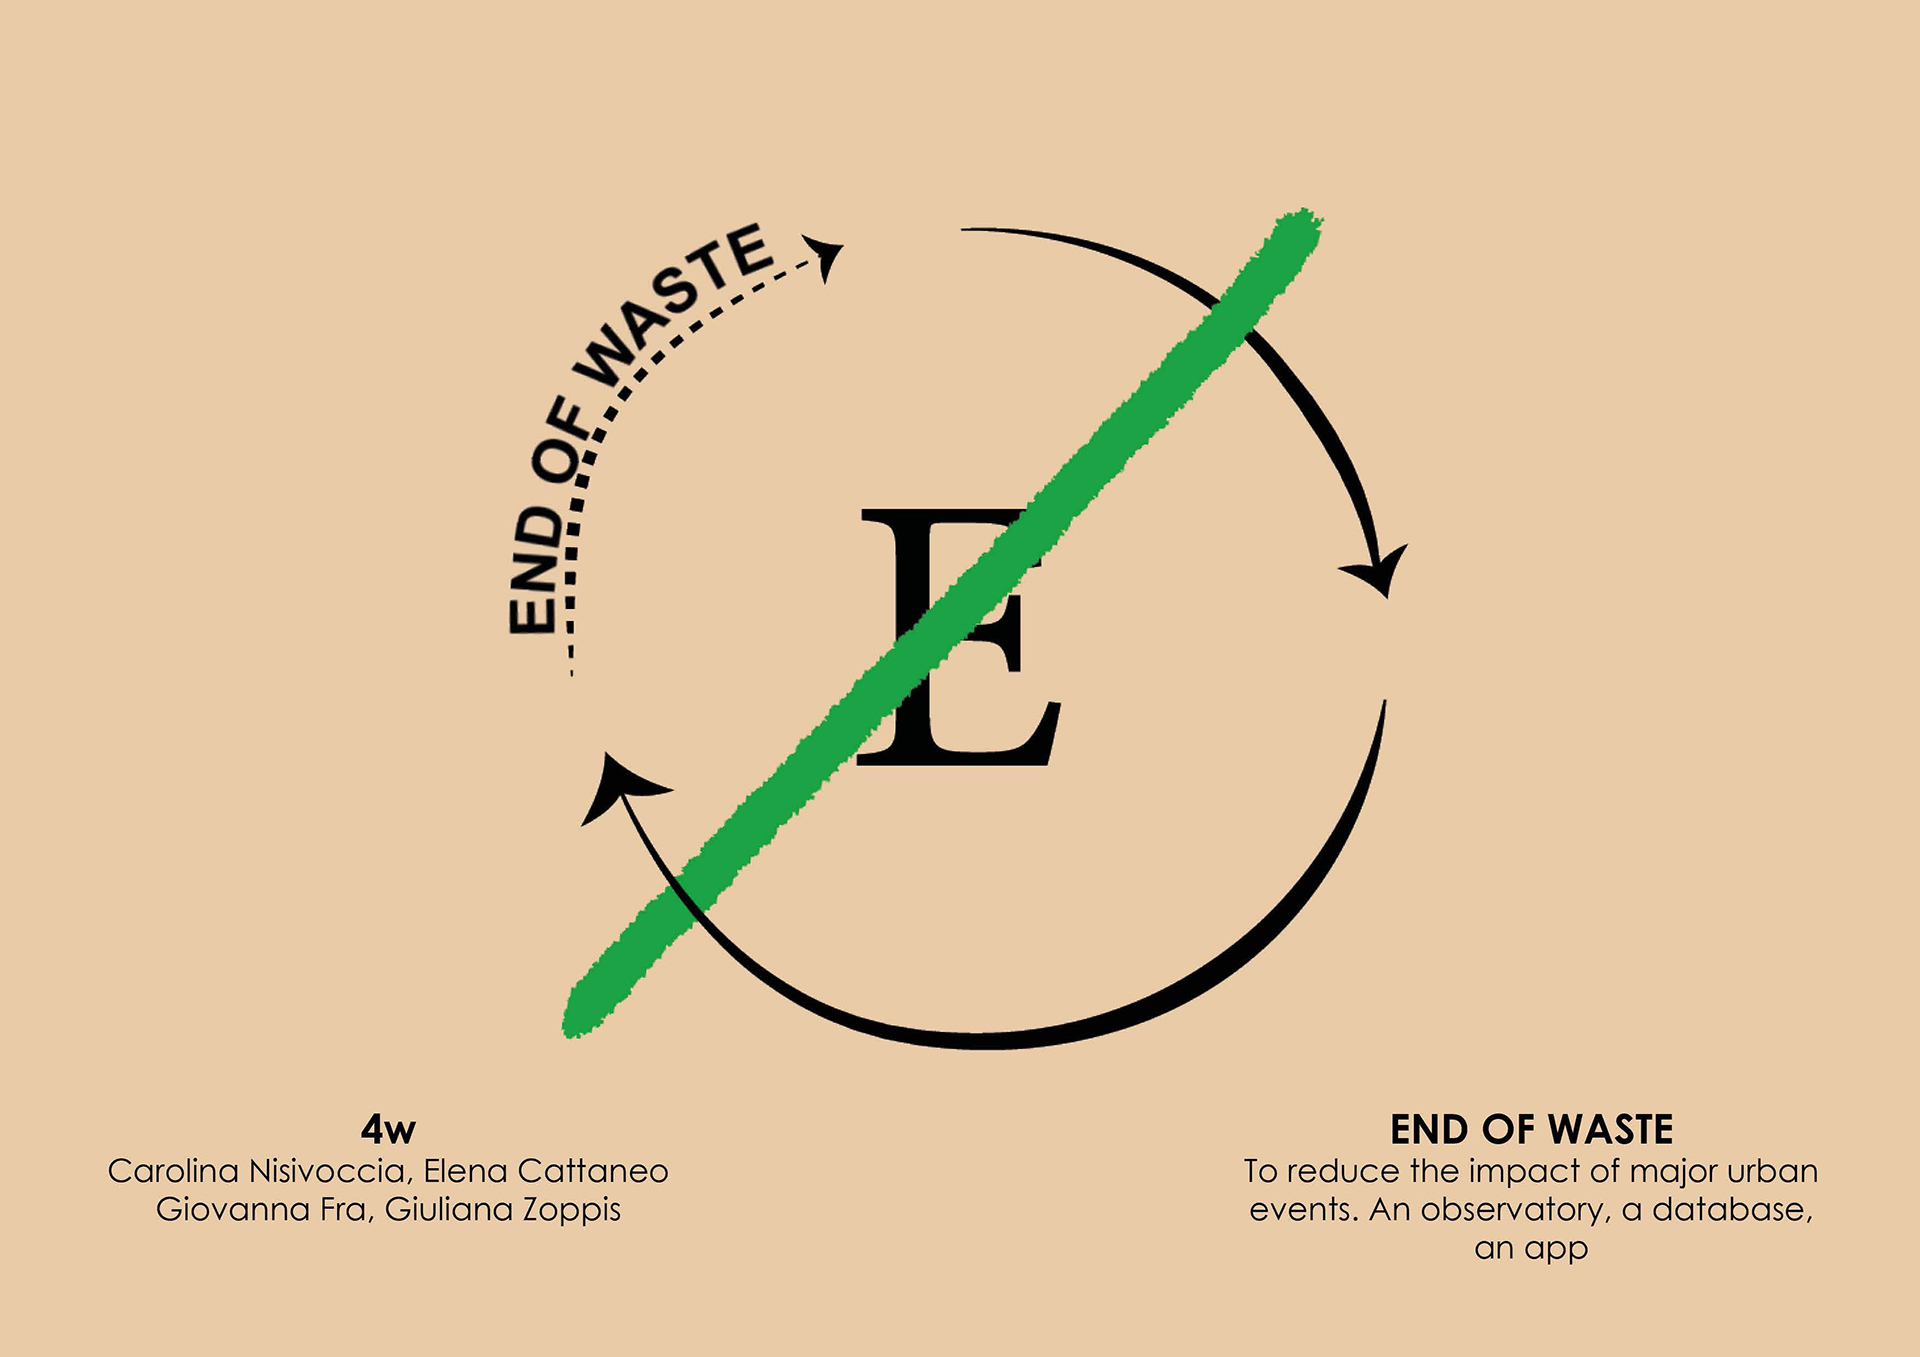 EoW, End of Waste, carolina nisivoccia, project